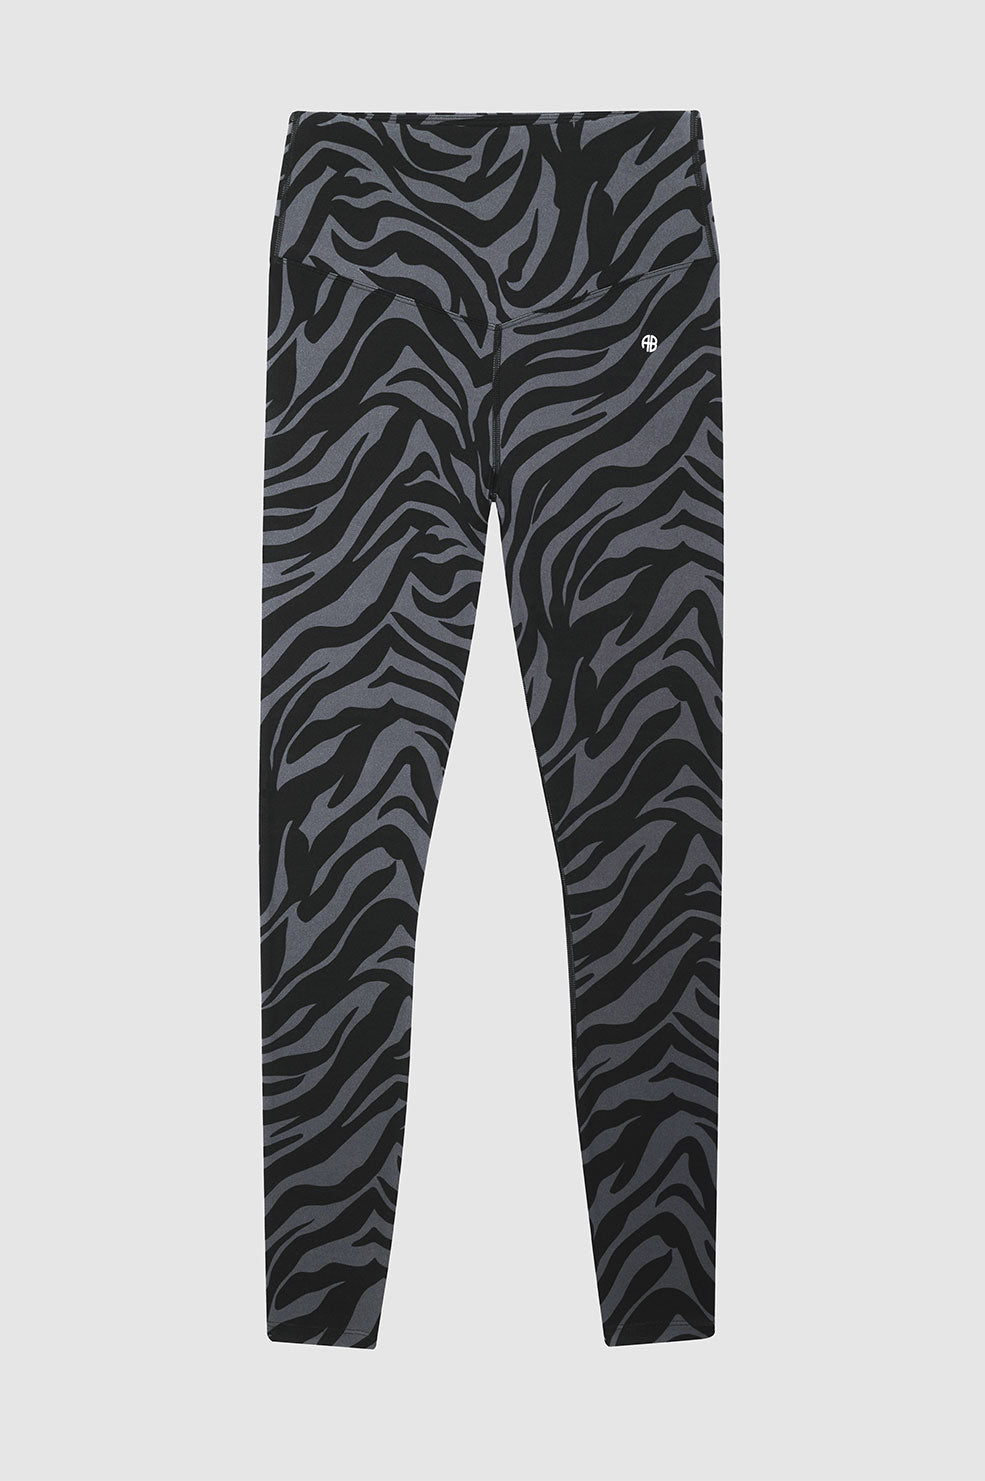 ANINE BING Blake Legging - Zebra Print - Front View